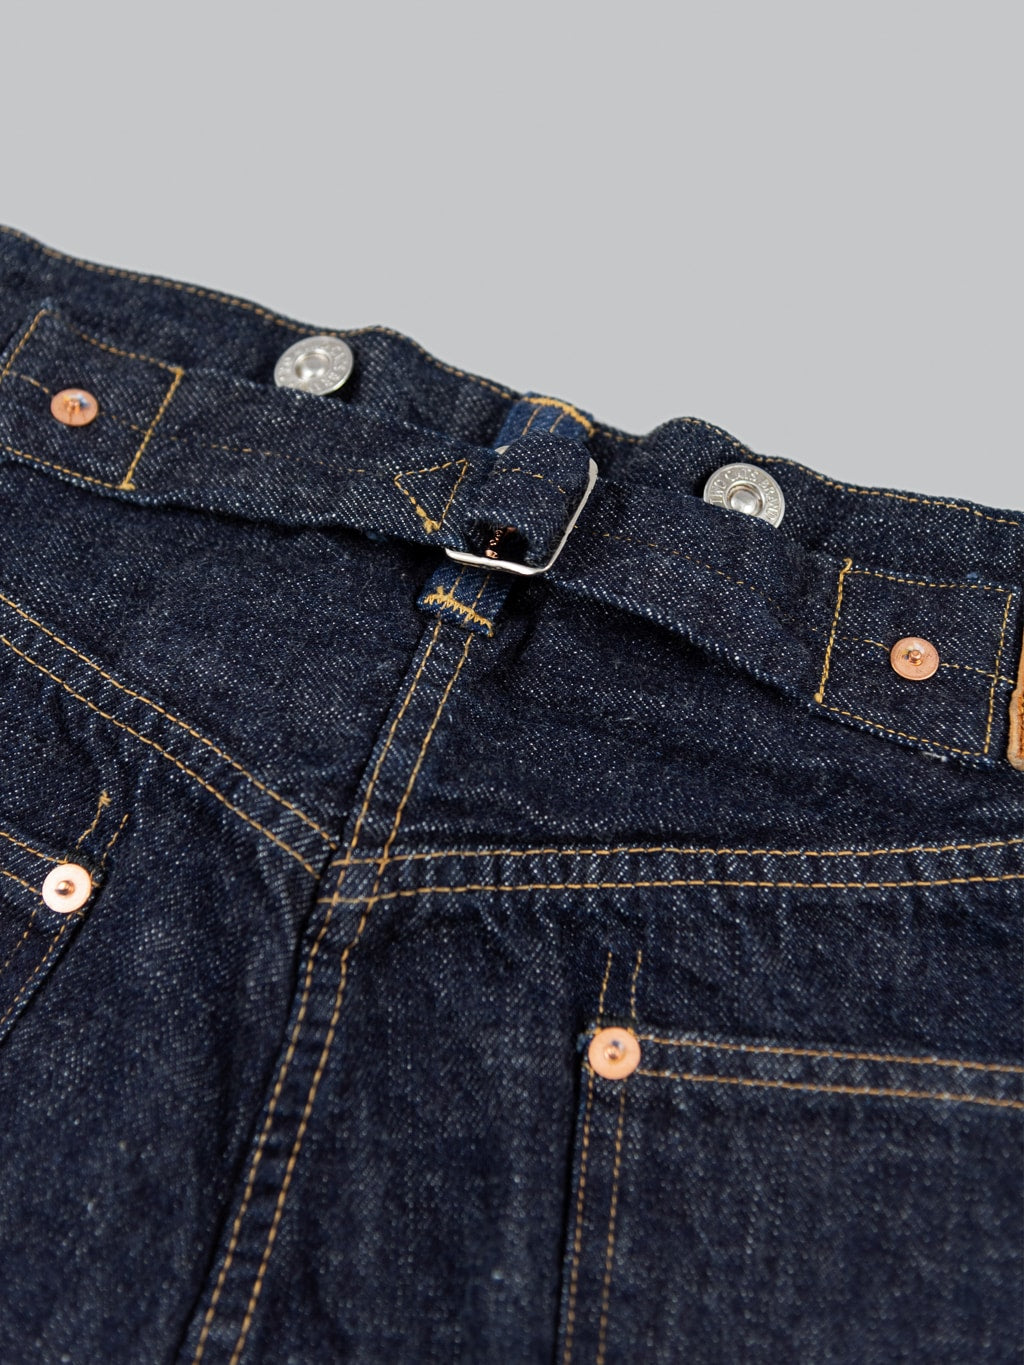 TCB 20s indigo Jeans one wash vintage style seams